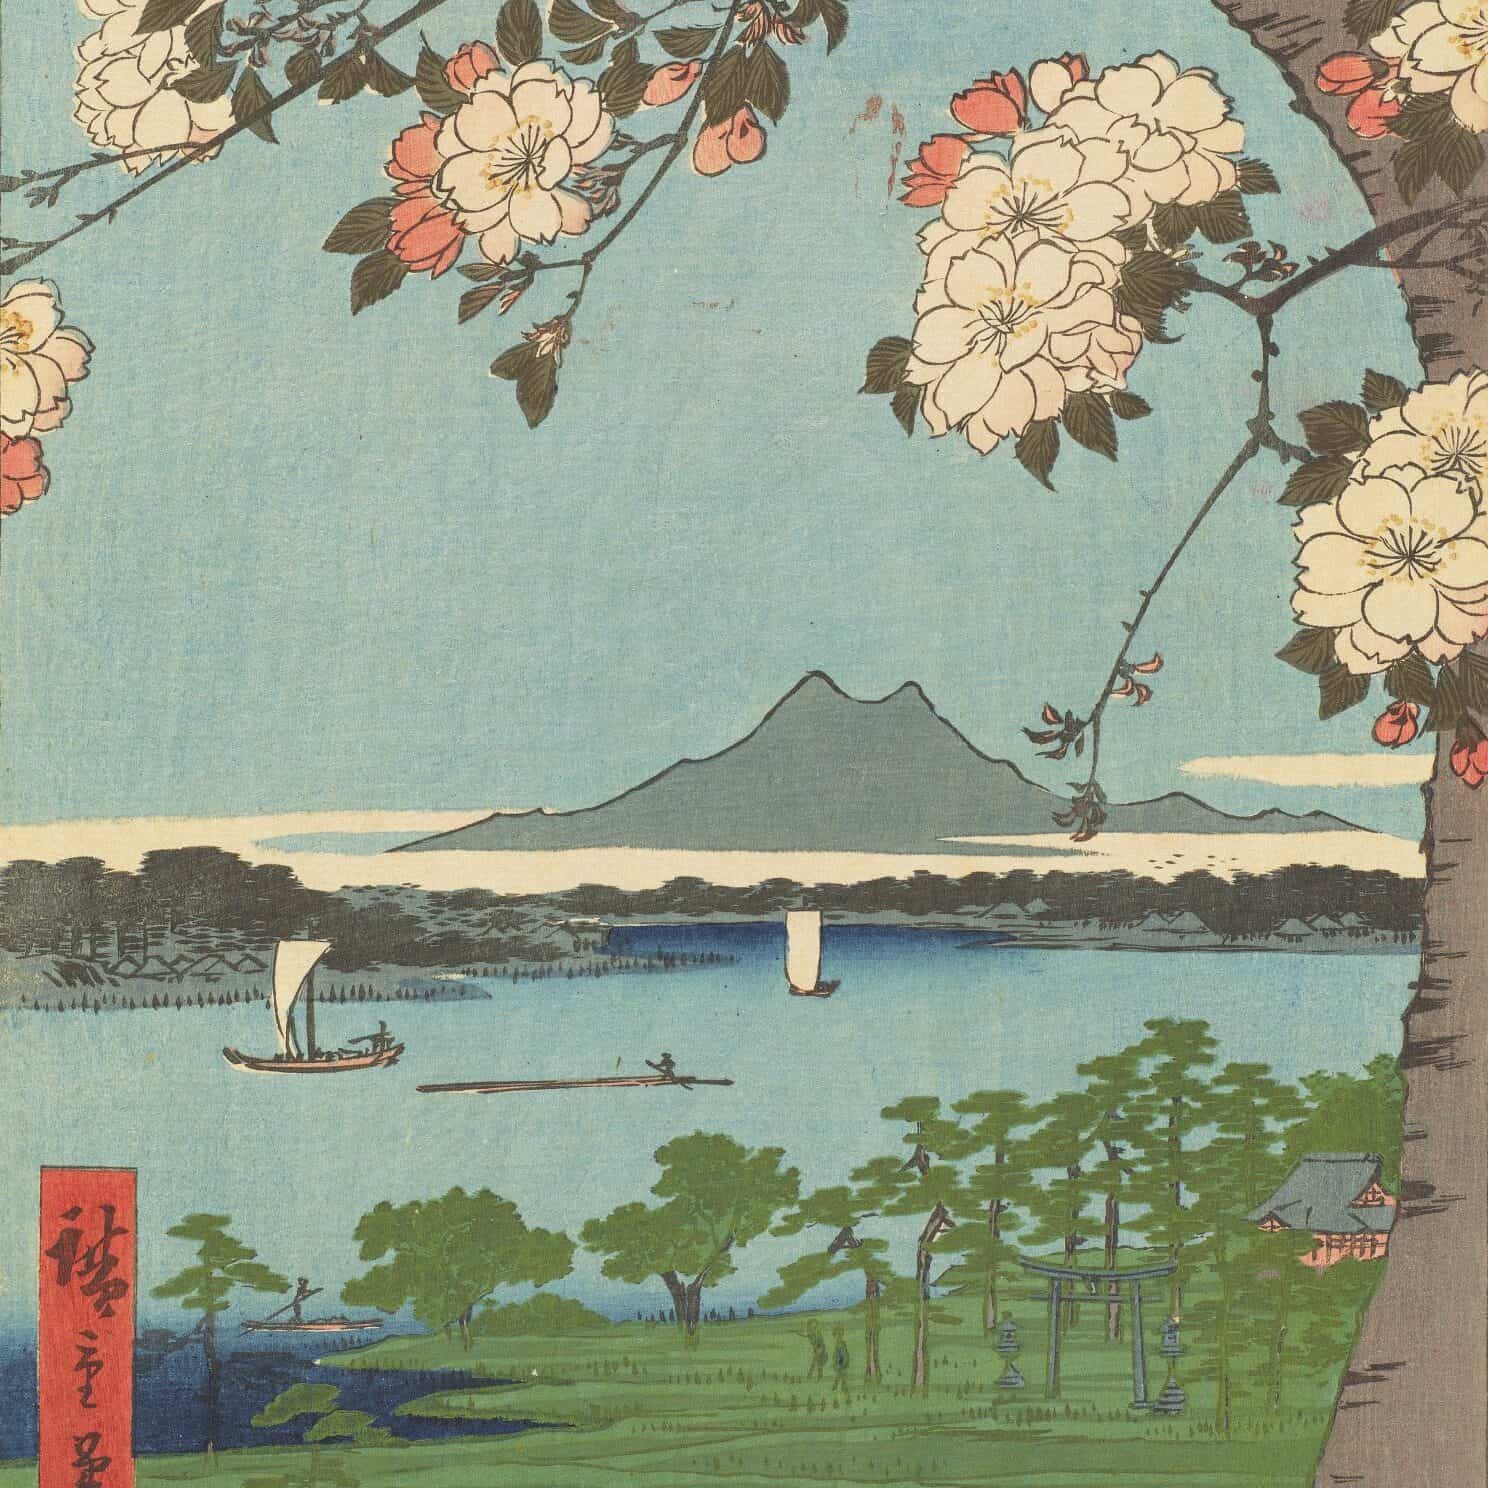 Utagawa Hiroshige - Cent vues d'Edo par Hiroshige n°35 : Printemps - Suijin Shrine and Massaki on the Sumida River (1856)